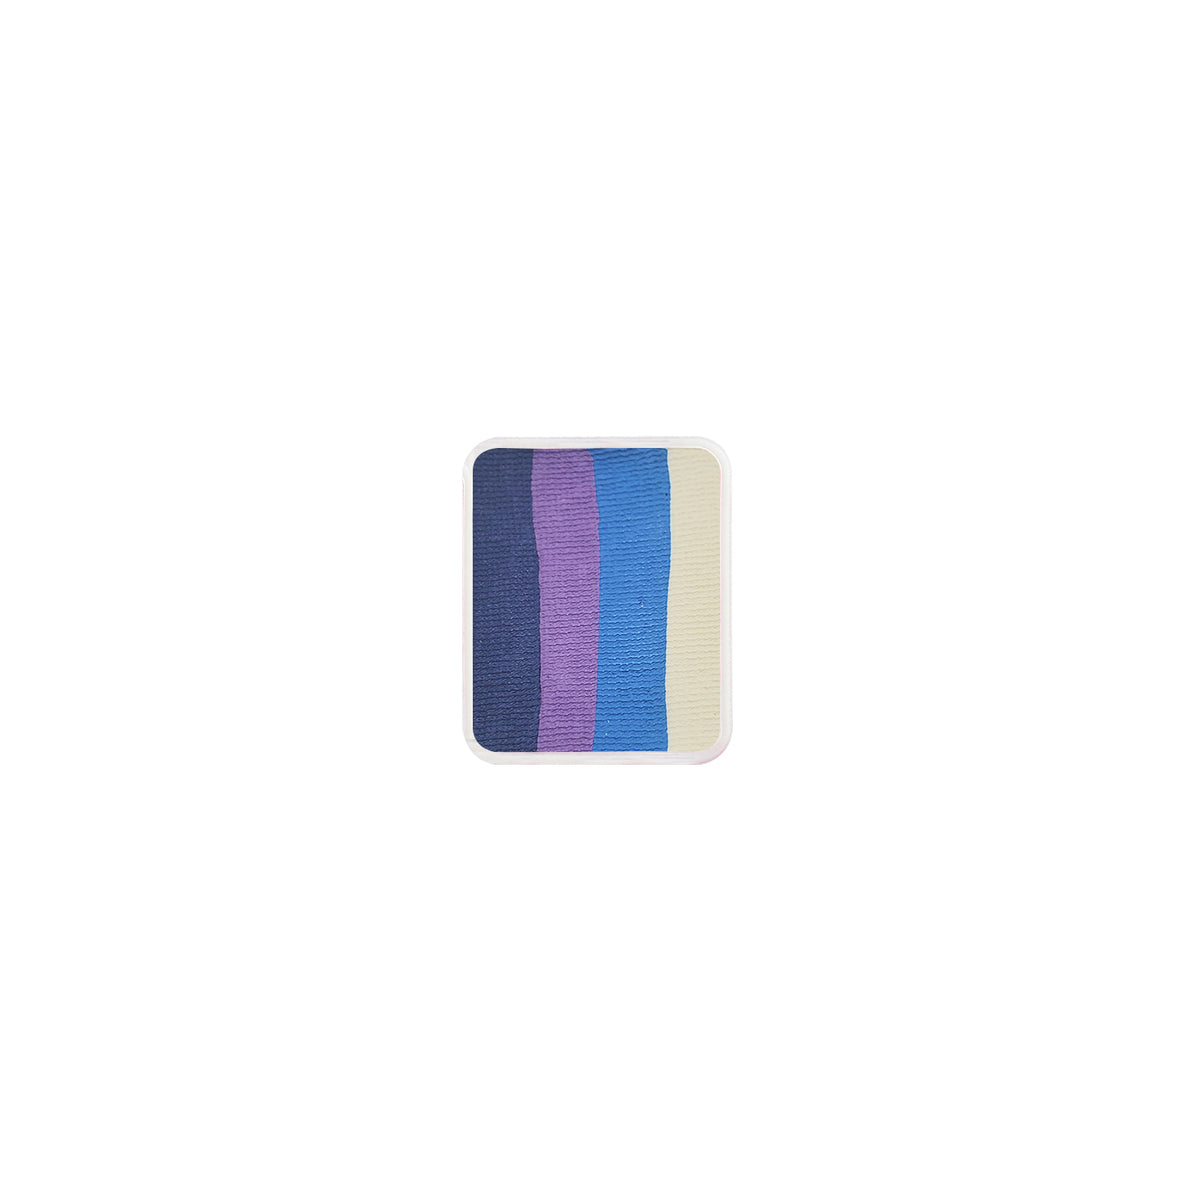 Kraze FX One Stroke Palette Refill - Neon Twilight (0.21 oz/6 gm)